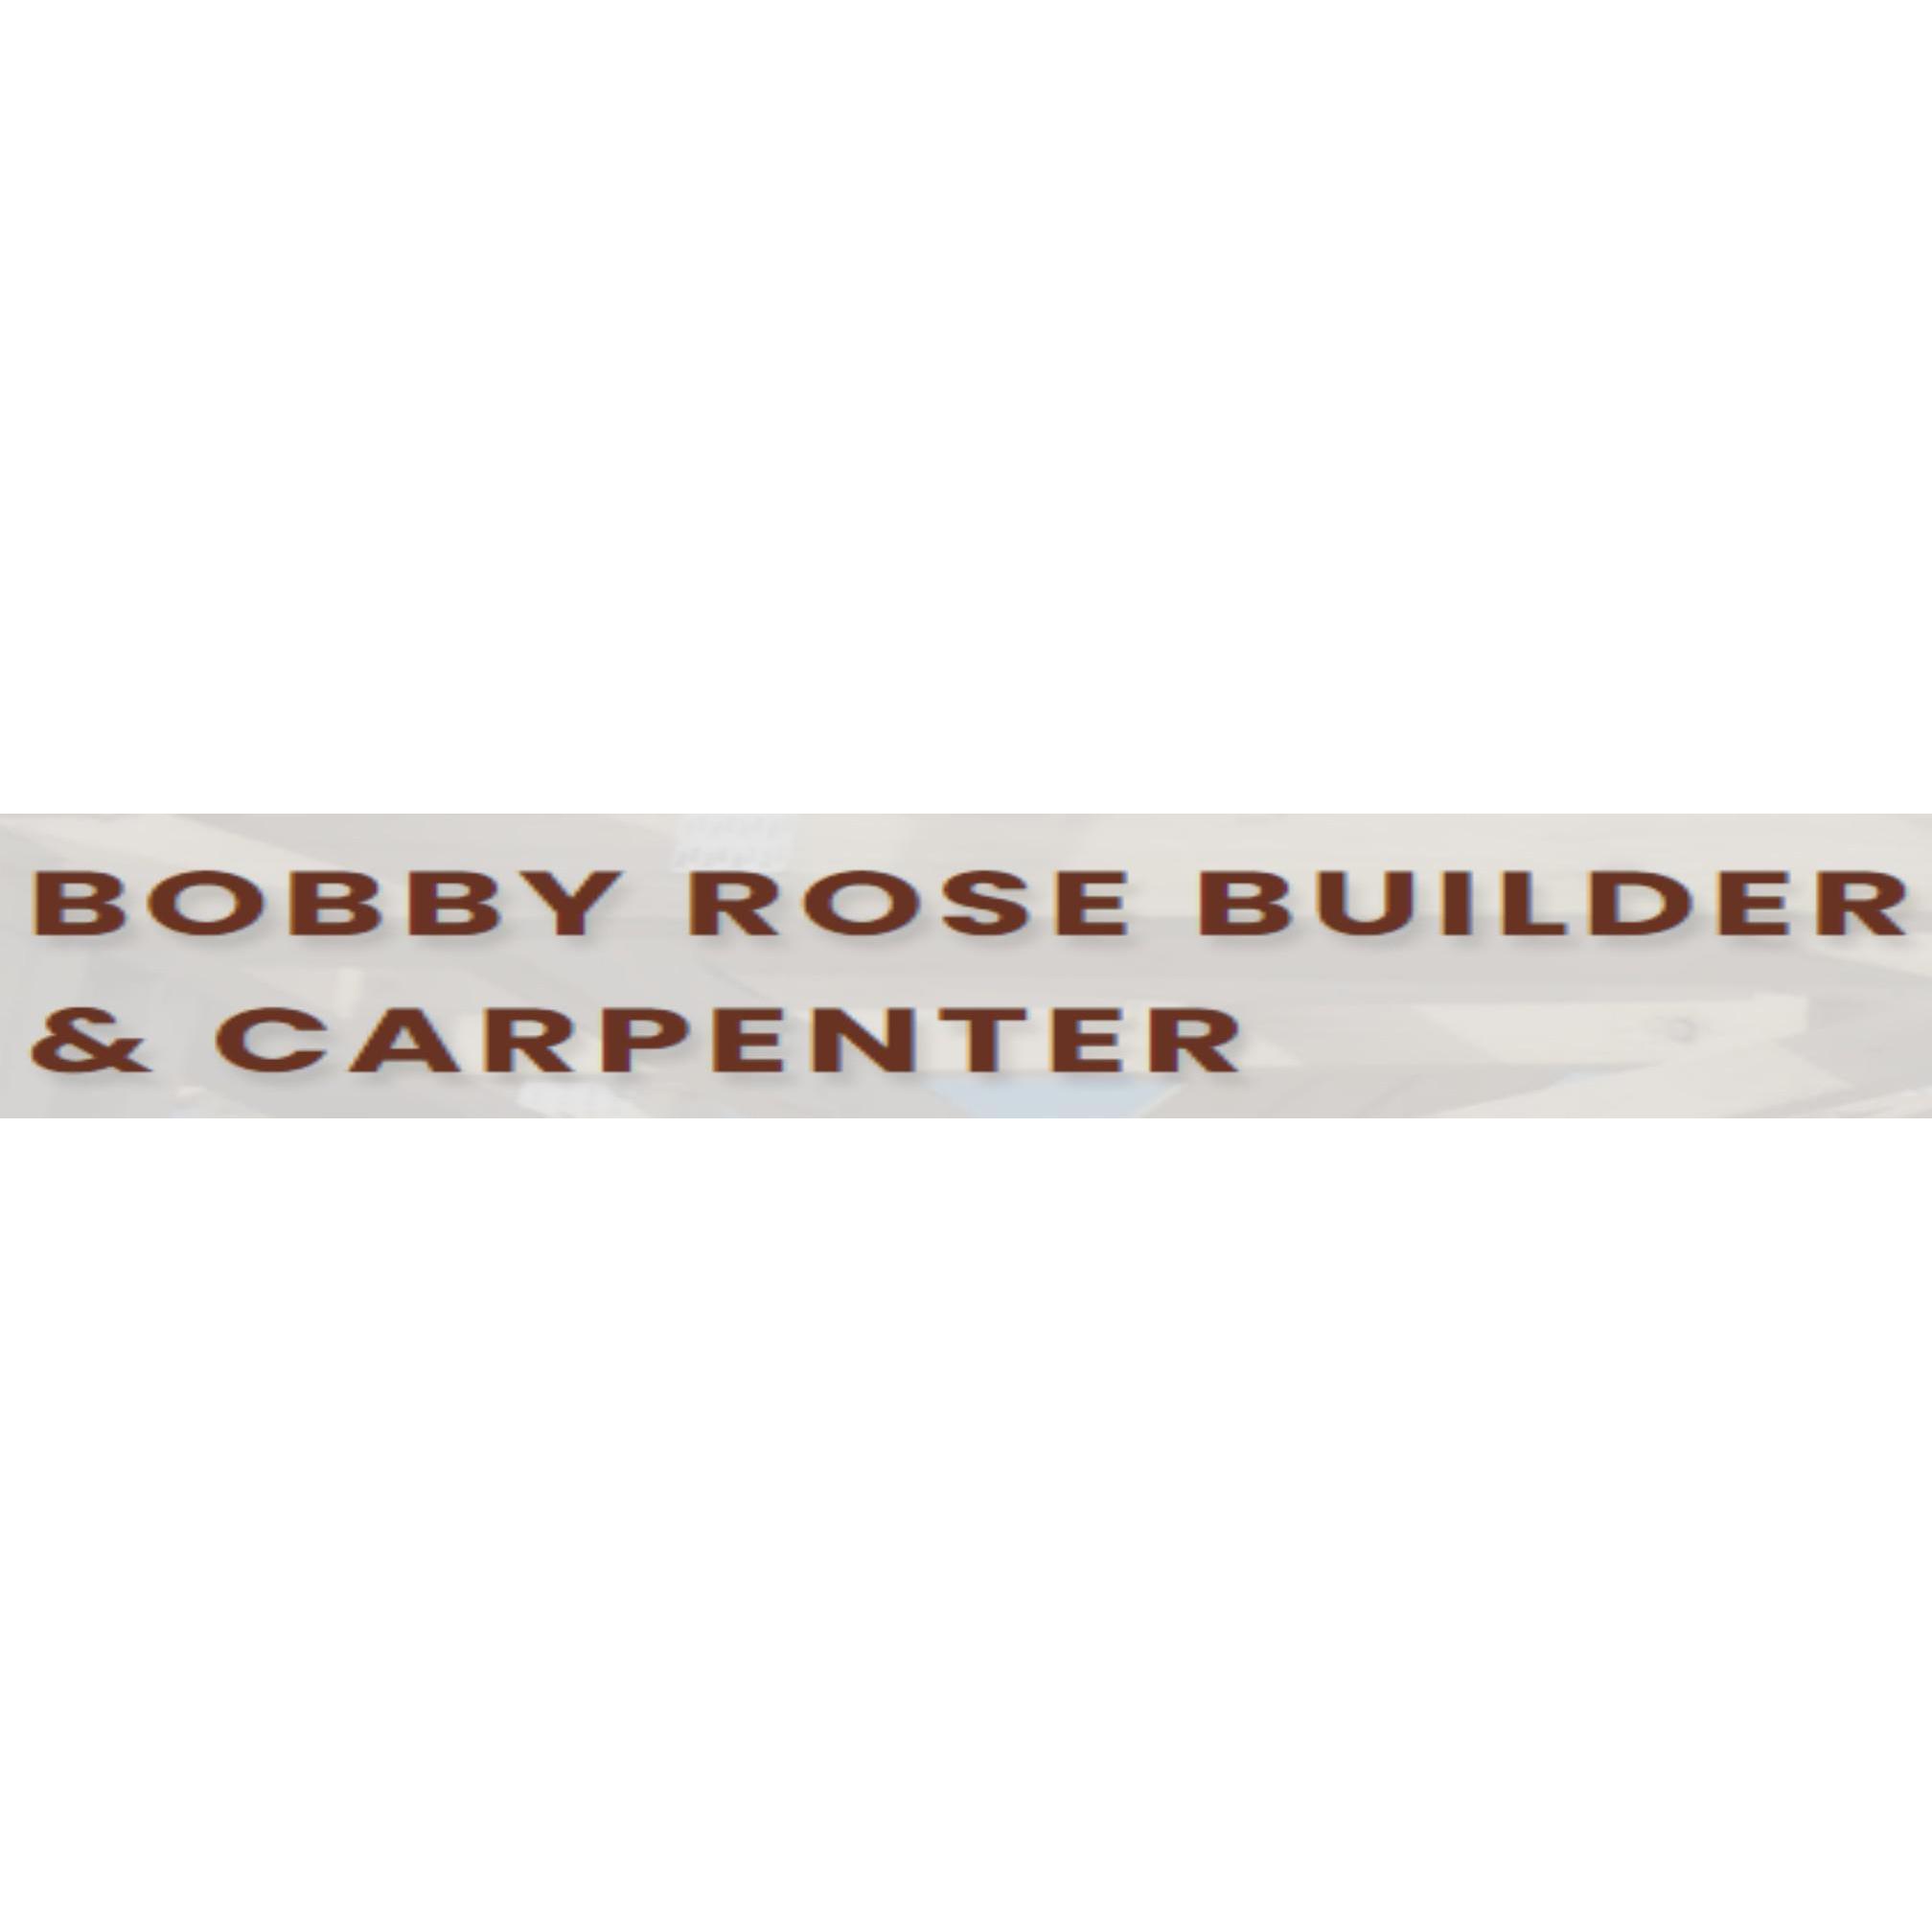 Bobby Rose Builder & Carpenter - Rochedale South, QLD 4123 - 0400 490 318 | ShowMeLocal.com